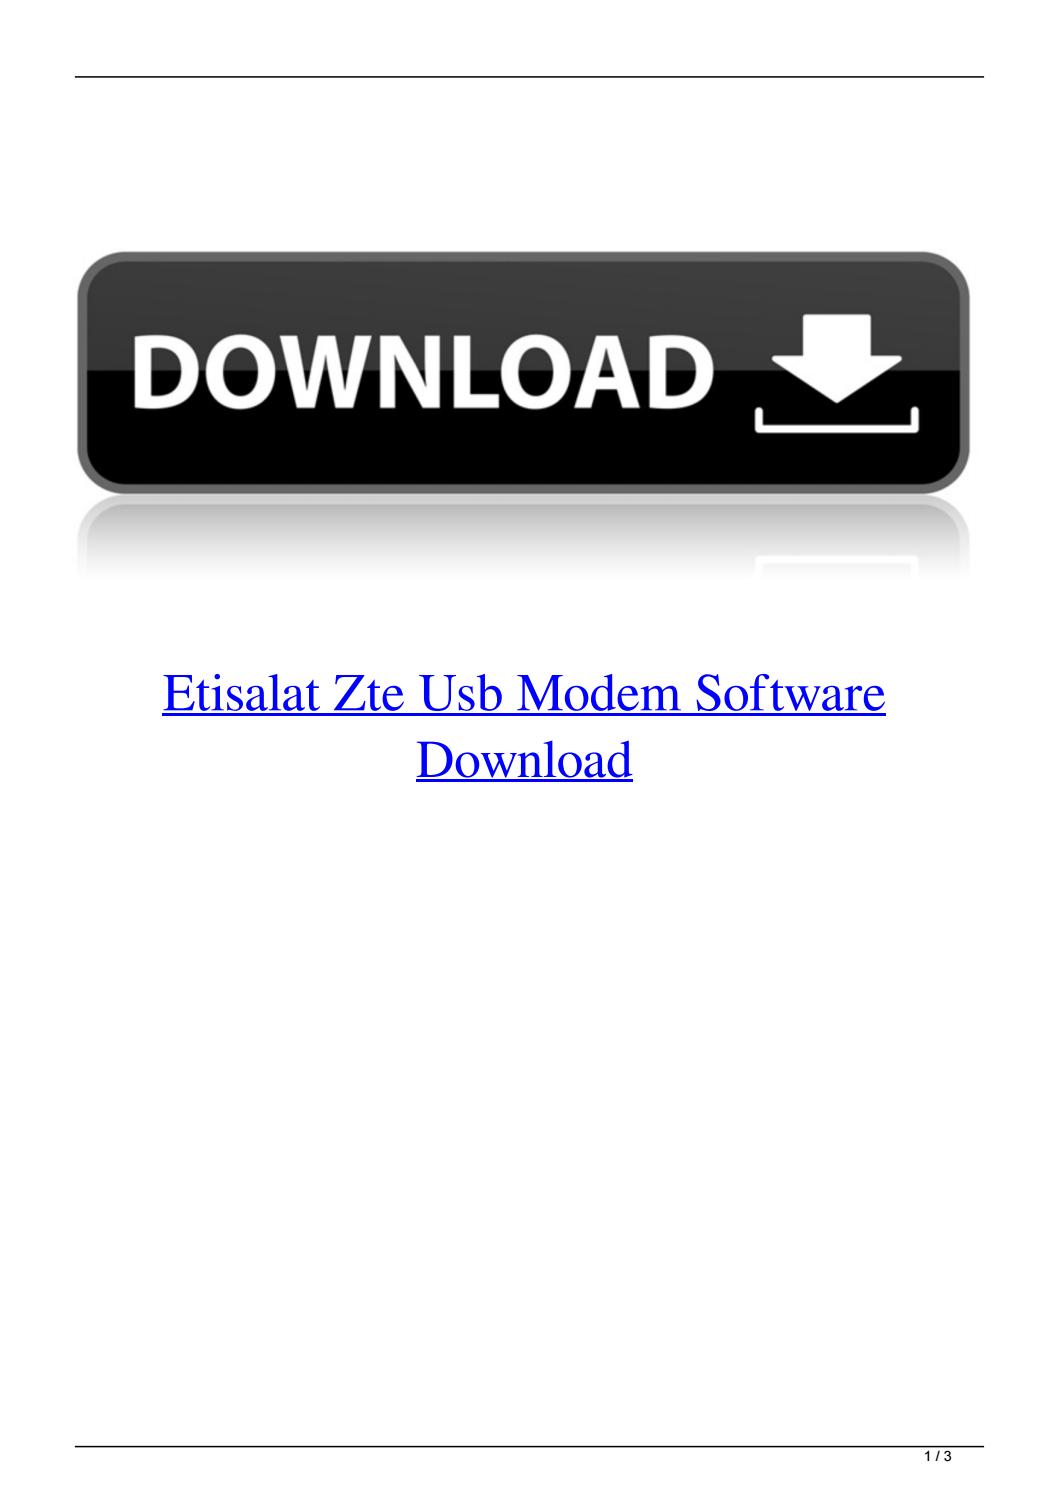 Etisalat usb modem software windows 10